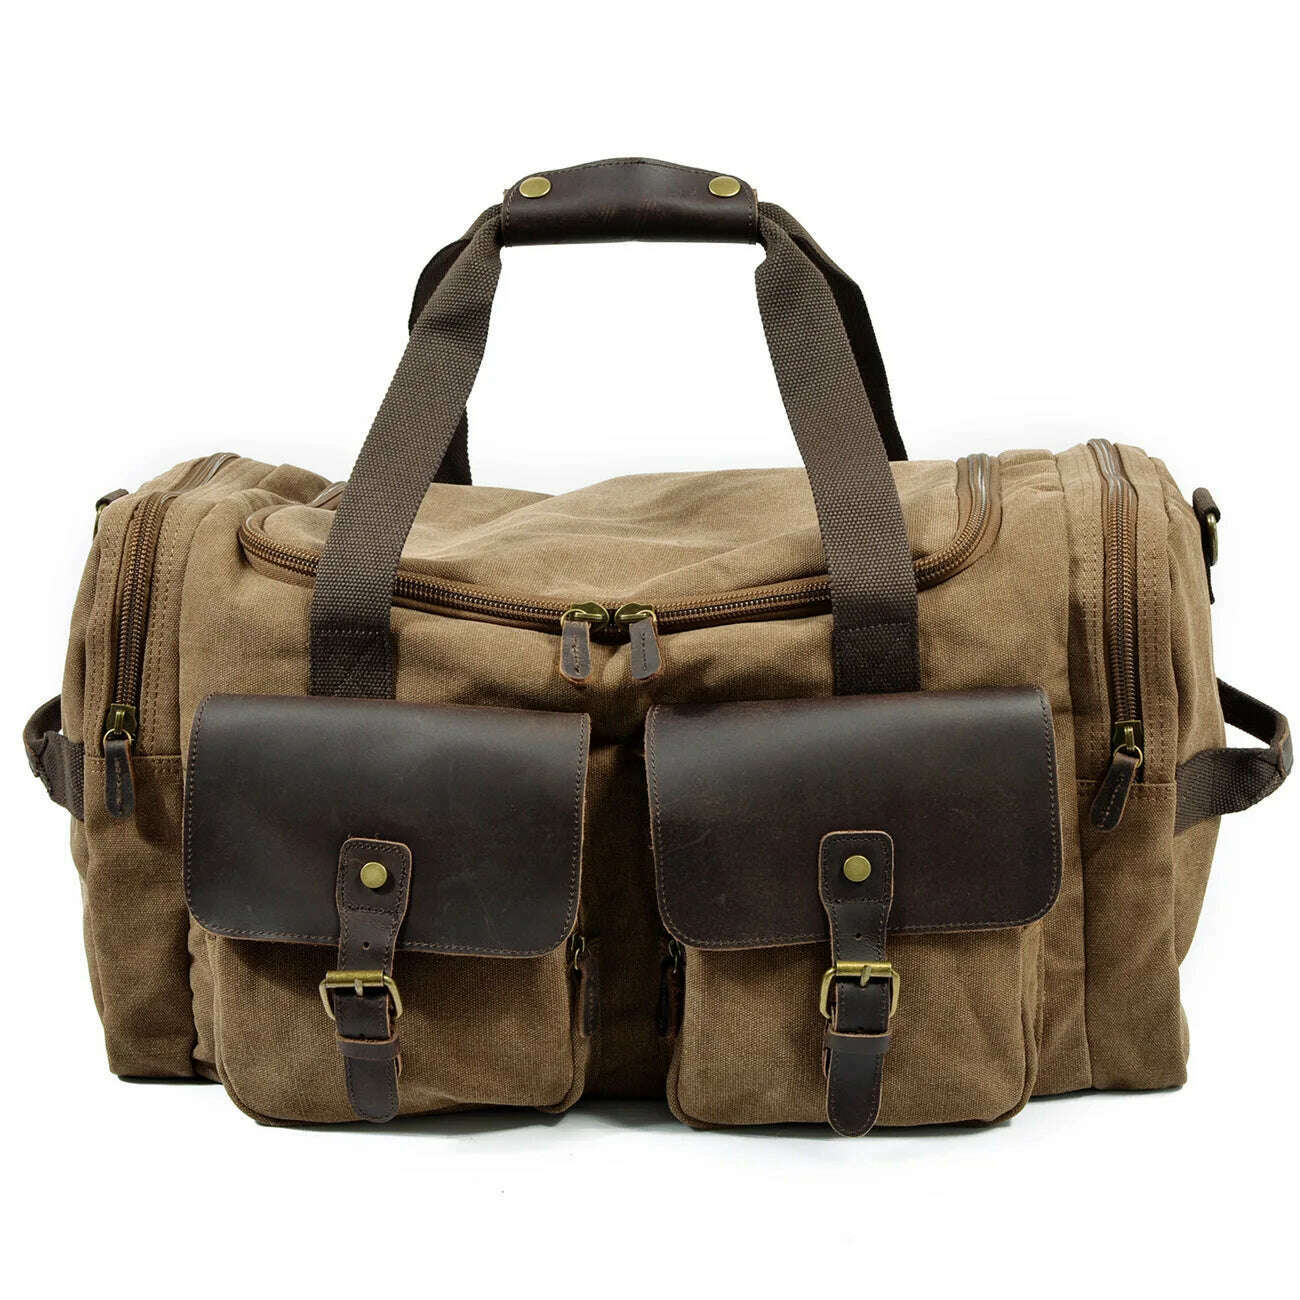 KIMLUD, Canvas bag large capacity for men's handbags leisure wear one shoulder aslant luggage, Dark brown, KIMLUD Womens Clothes